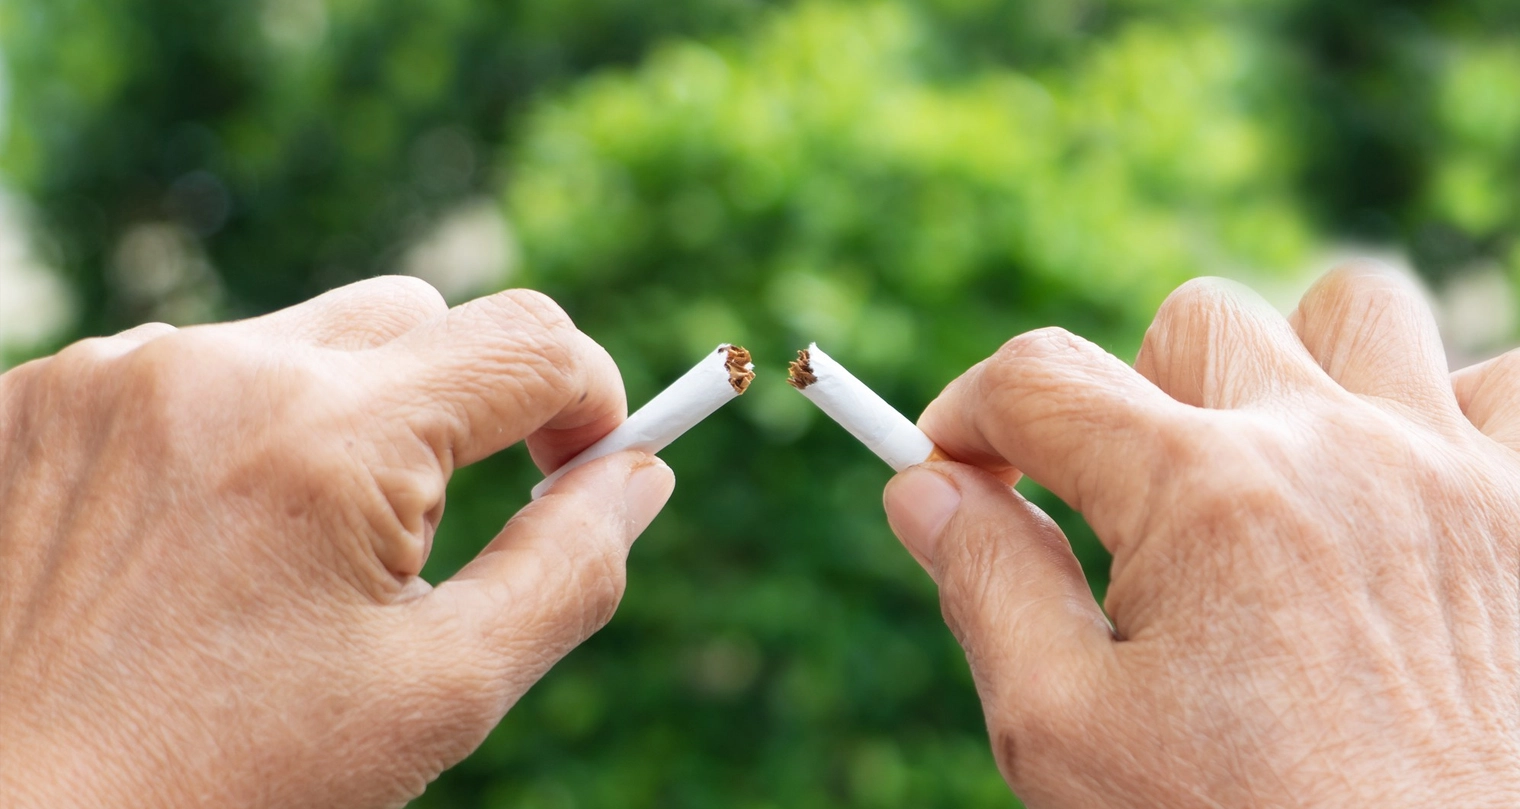 Strategi komunikasi berhenti merokok: Belajar dari merokok